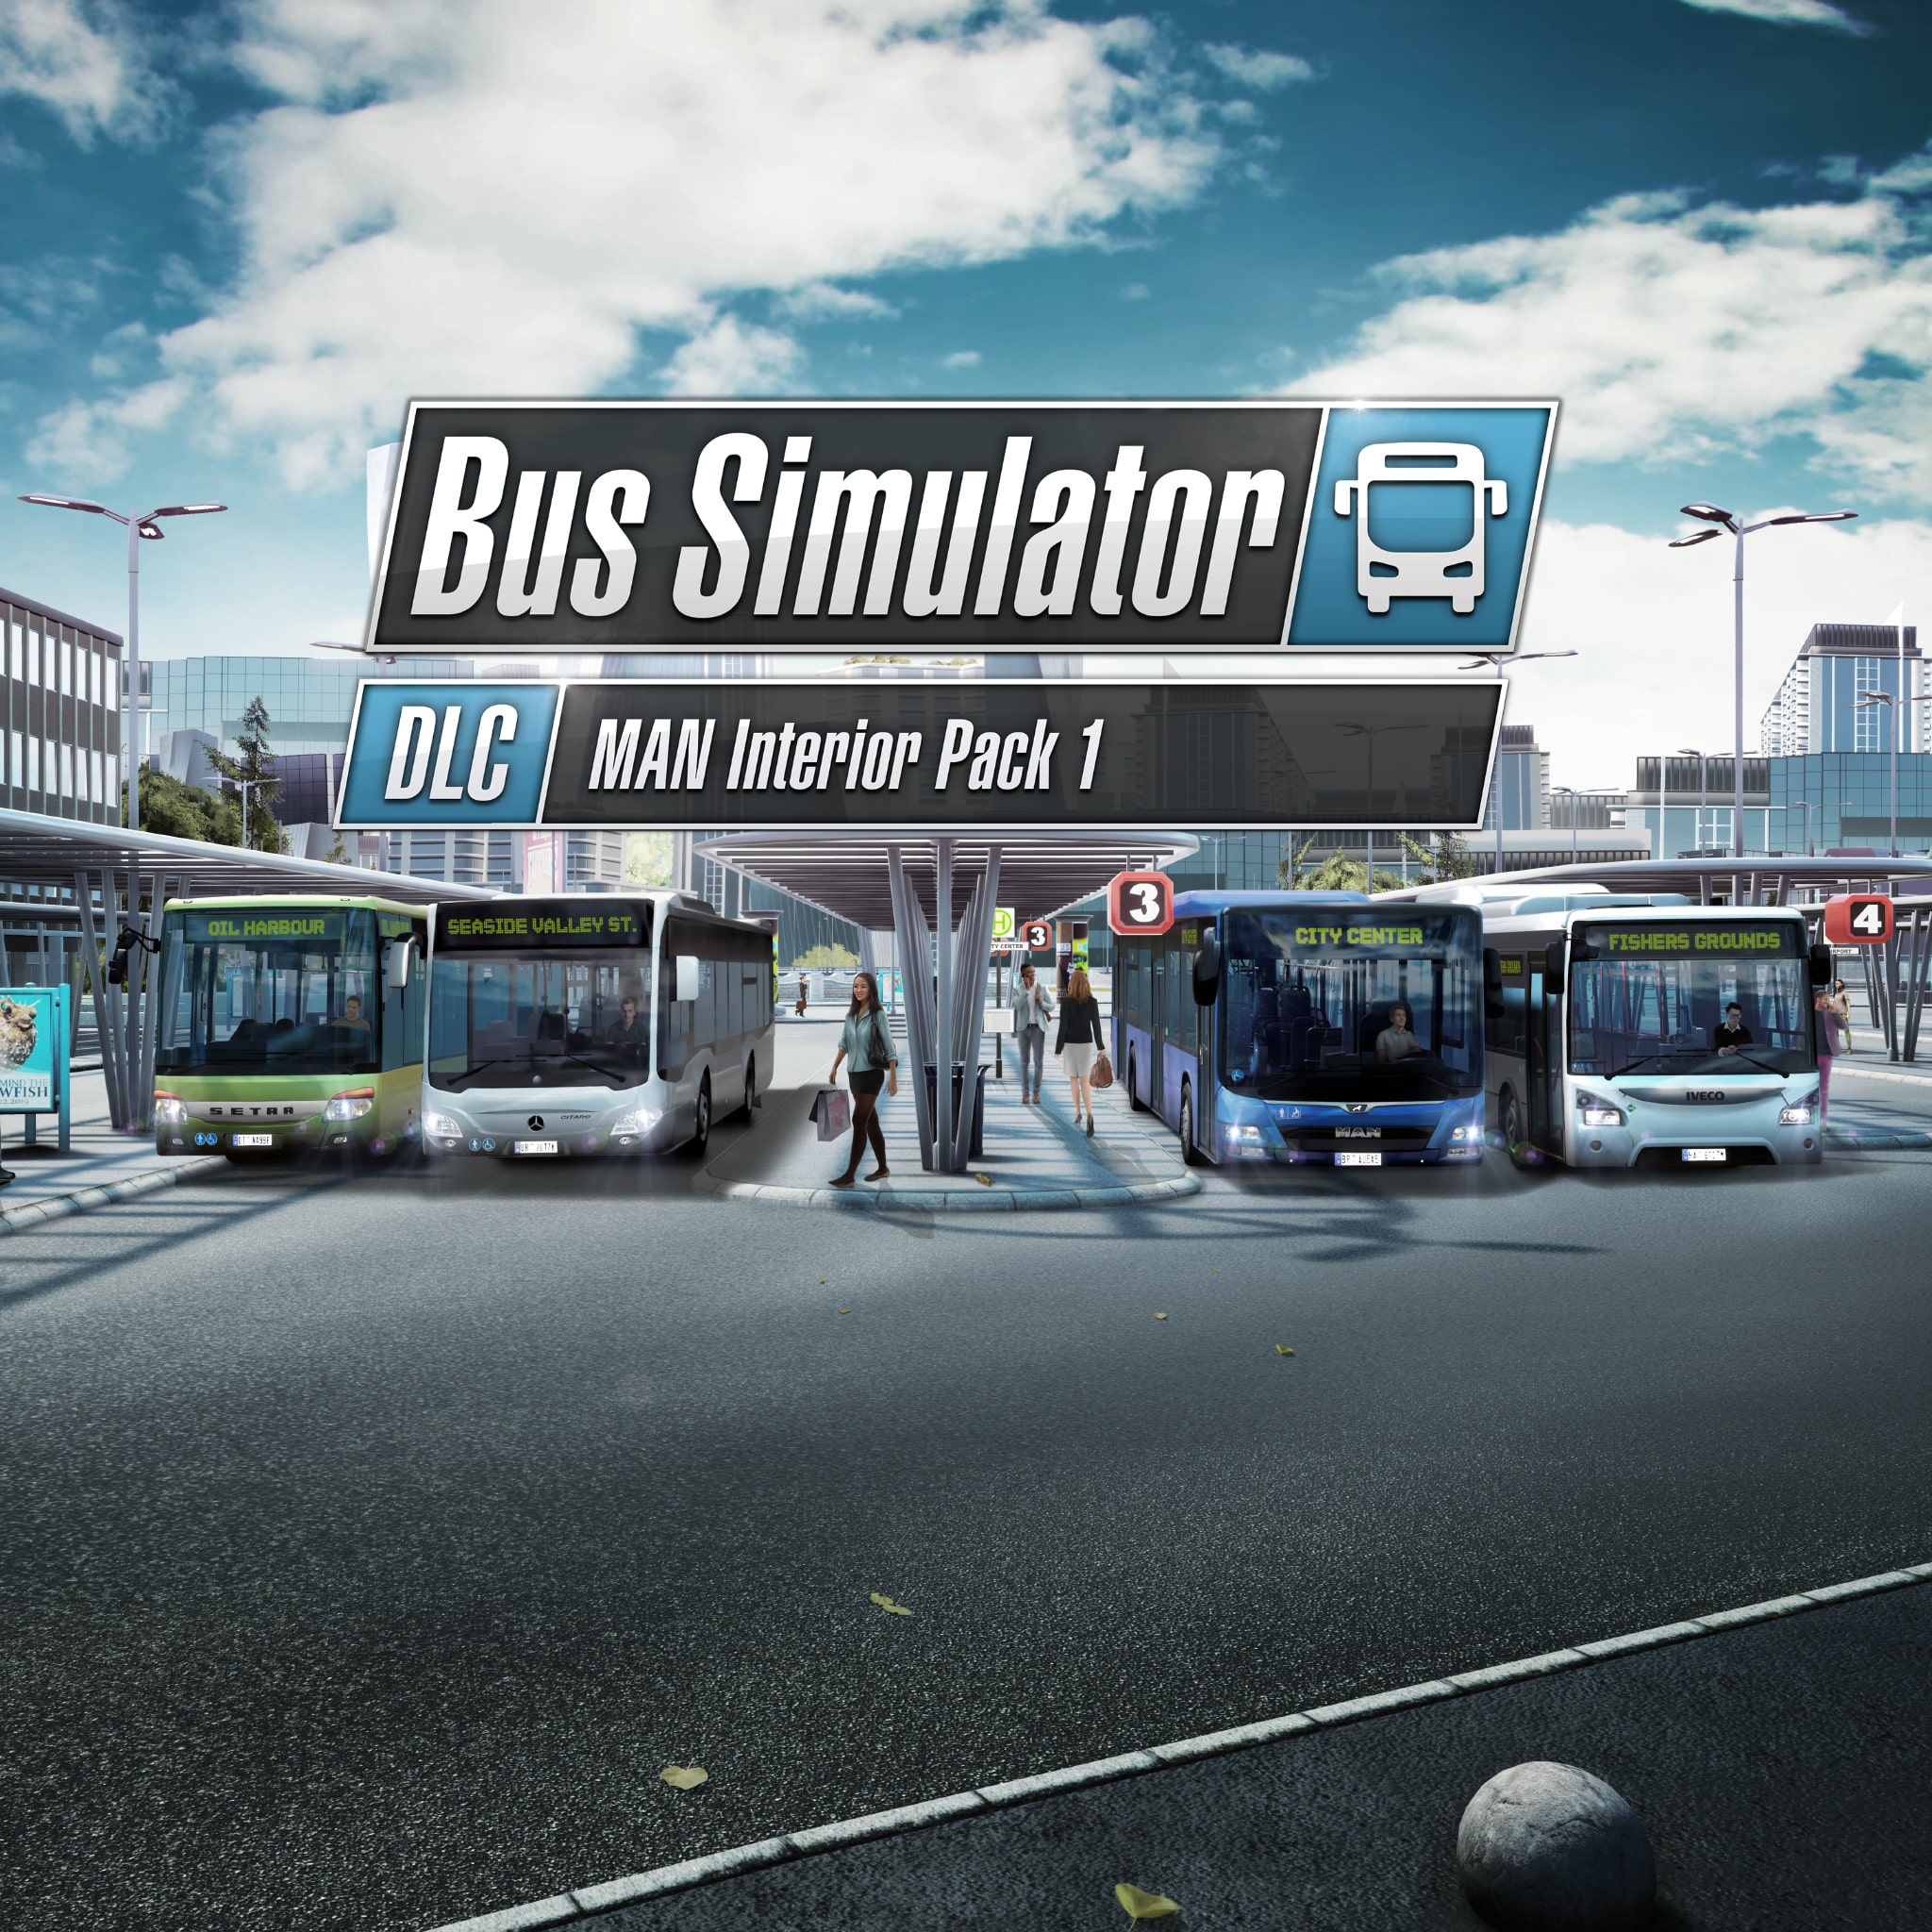 bus simulator 16 theme sing